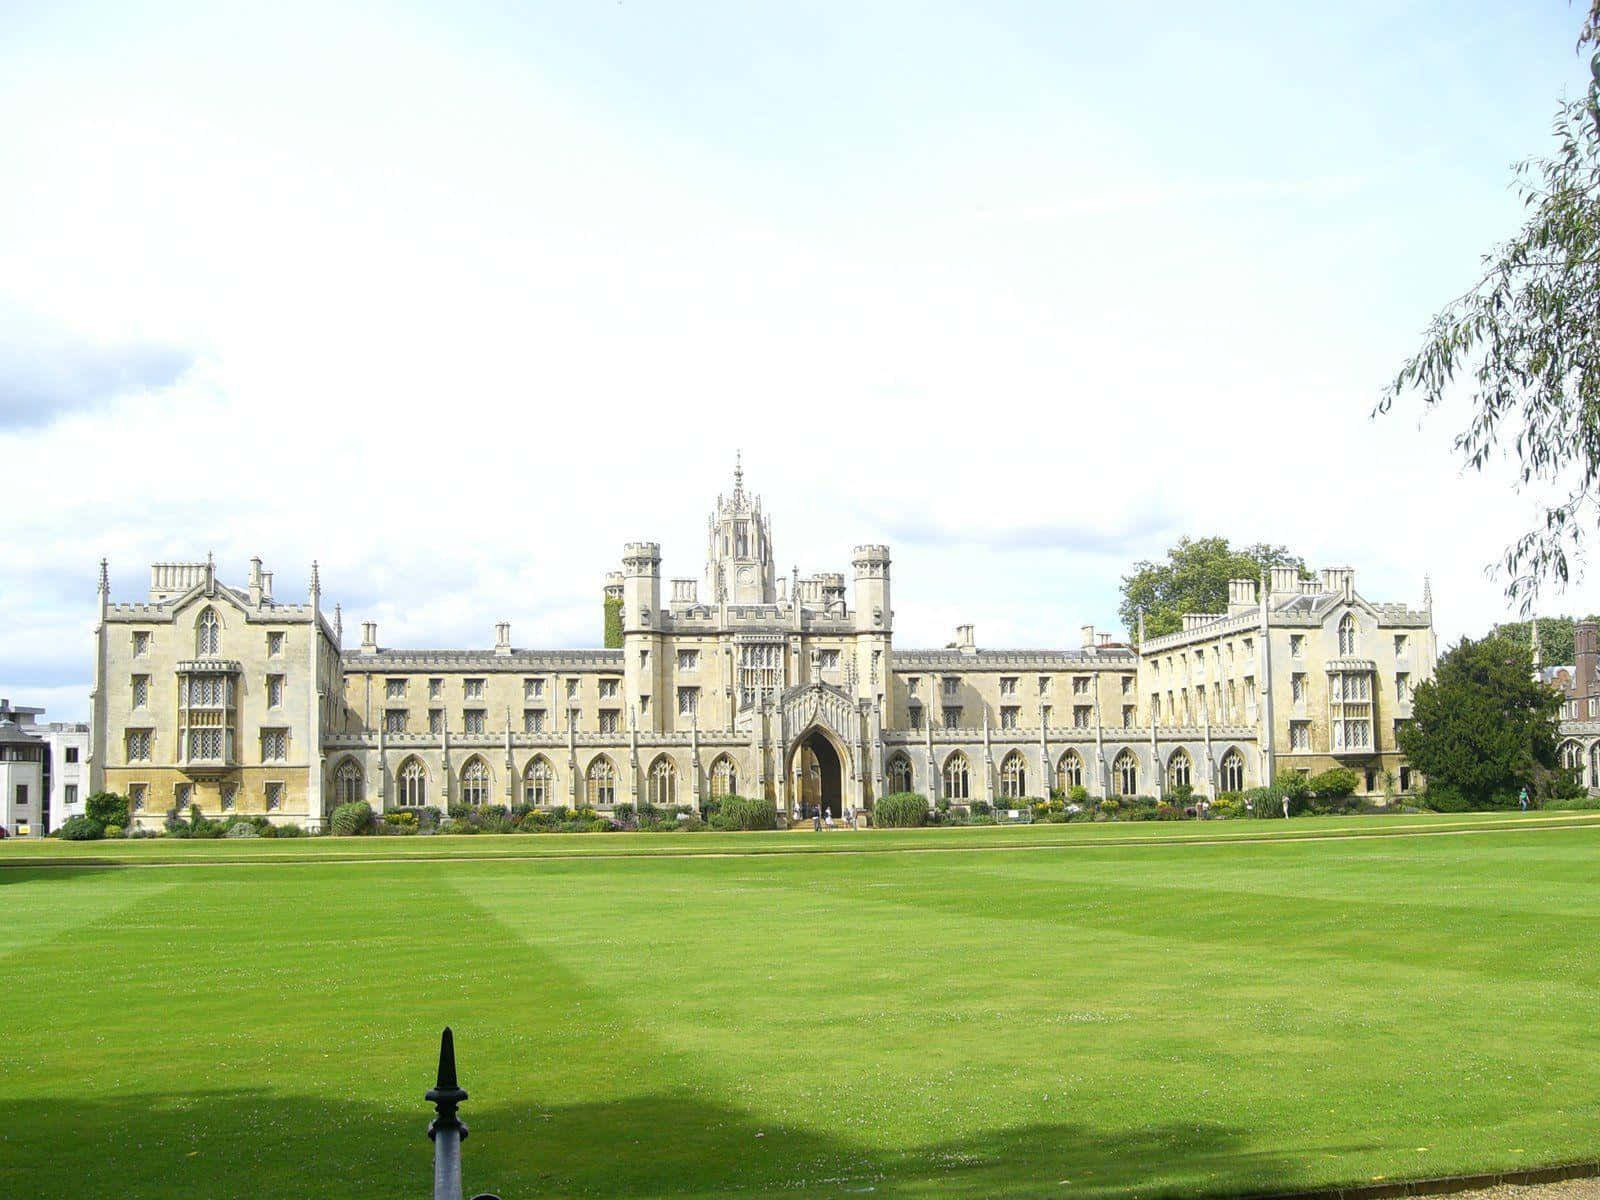 Stjohn's College, Cambridge University Panorama - St John's College, Cambridge Universitet Panorama. Wallpaper